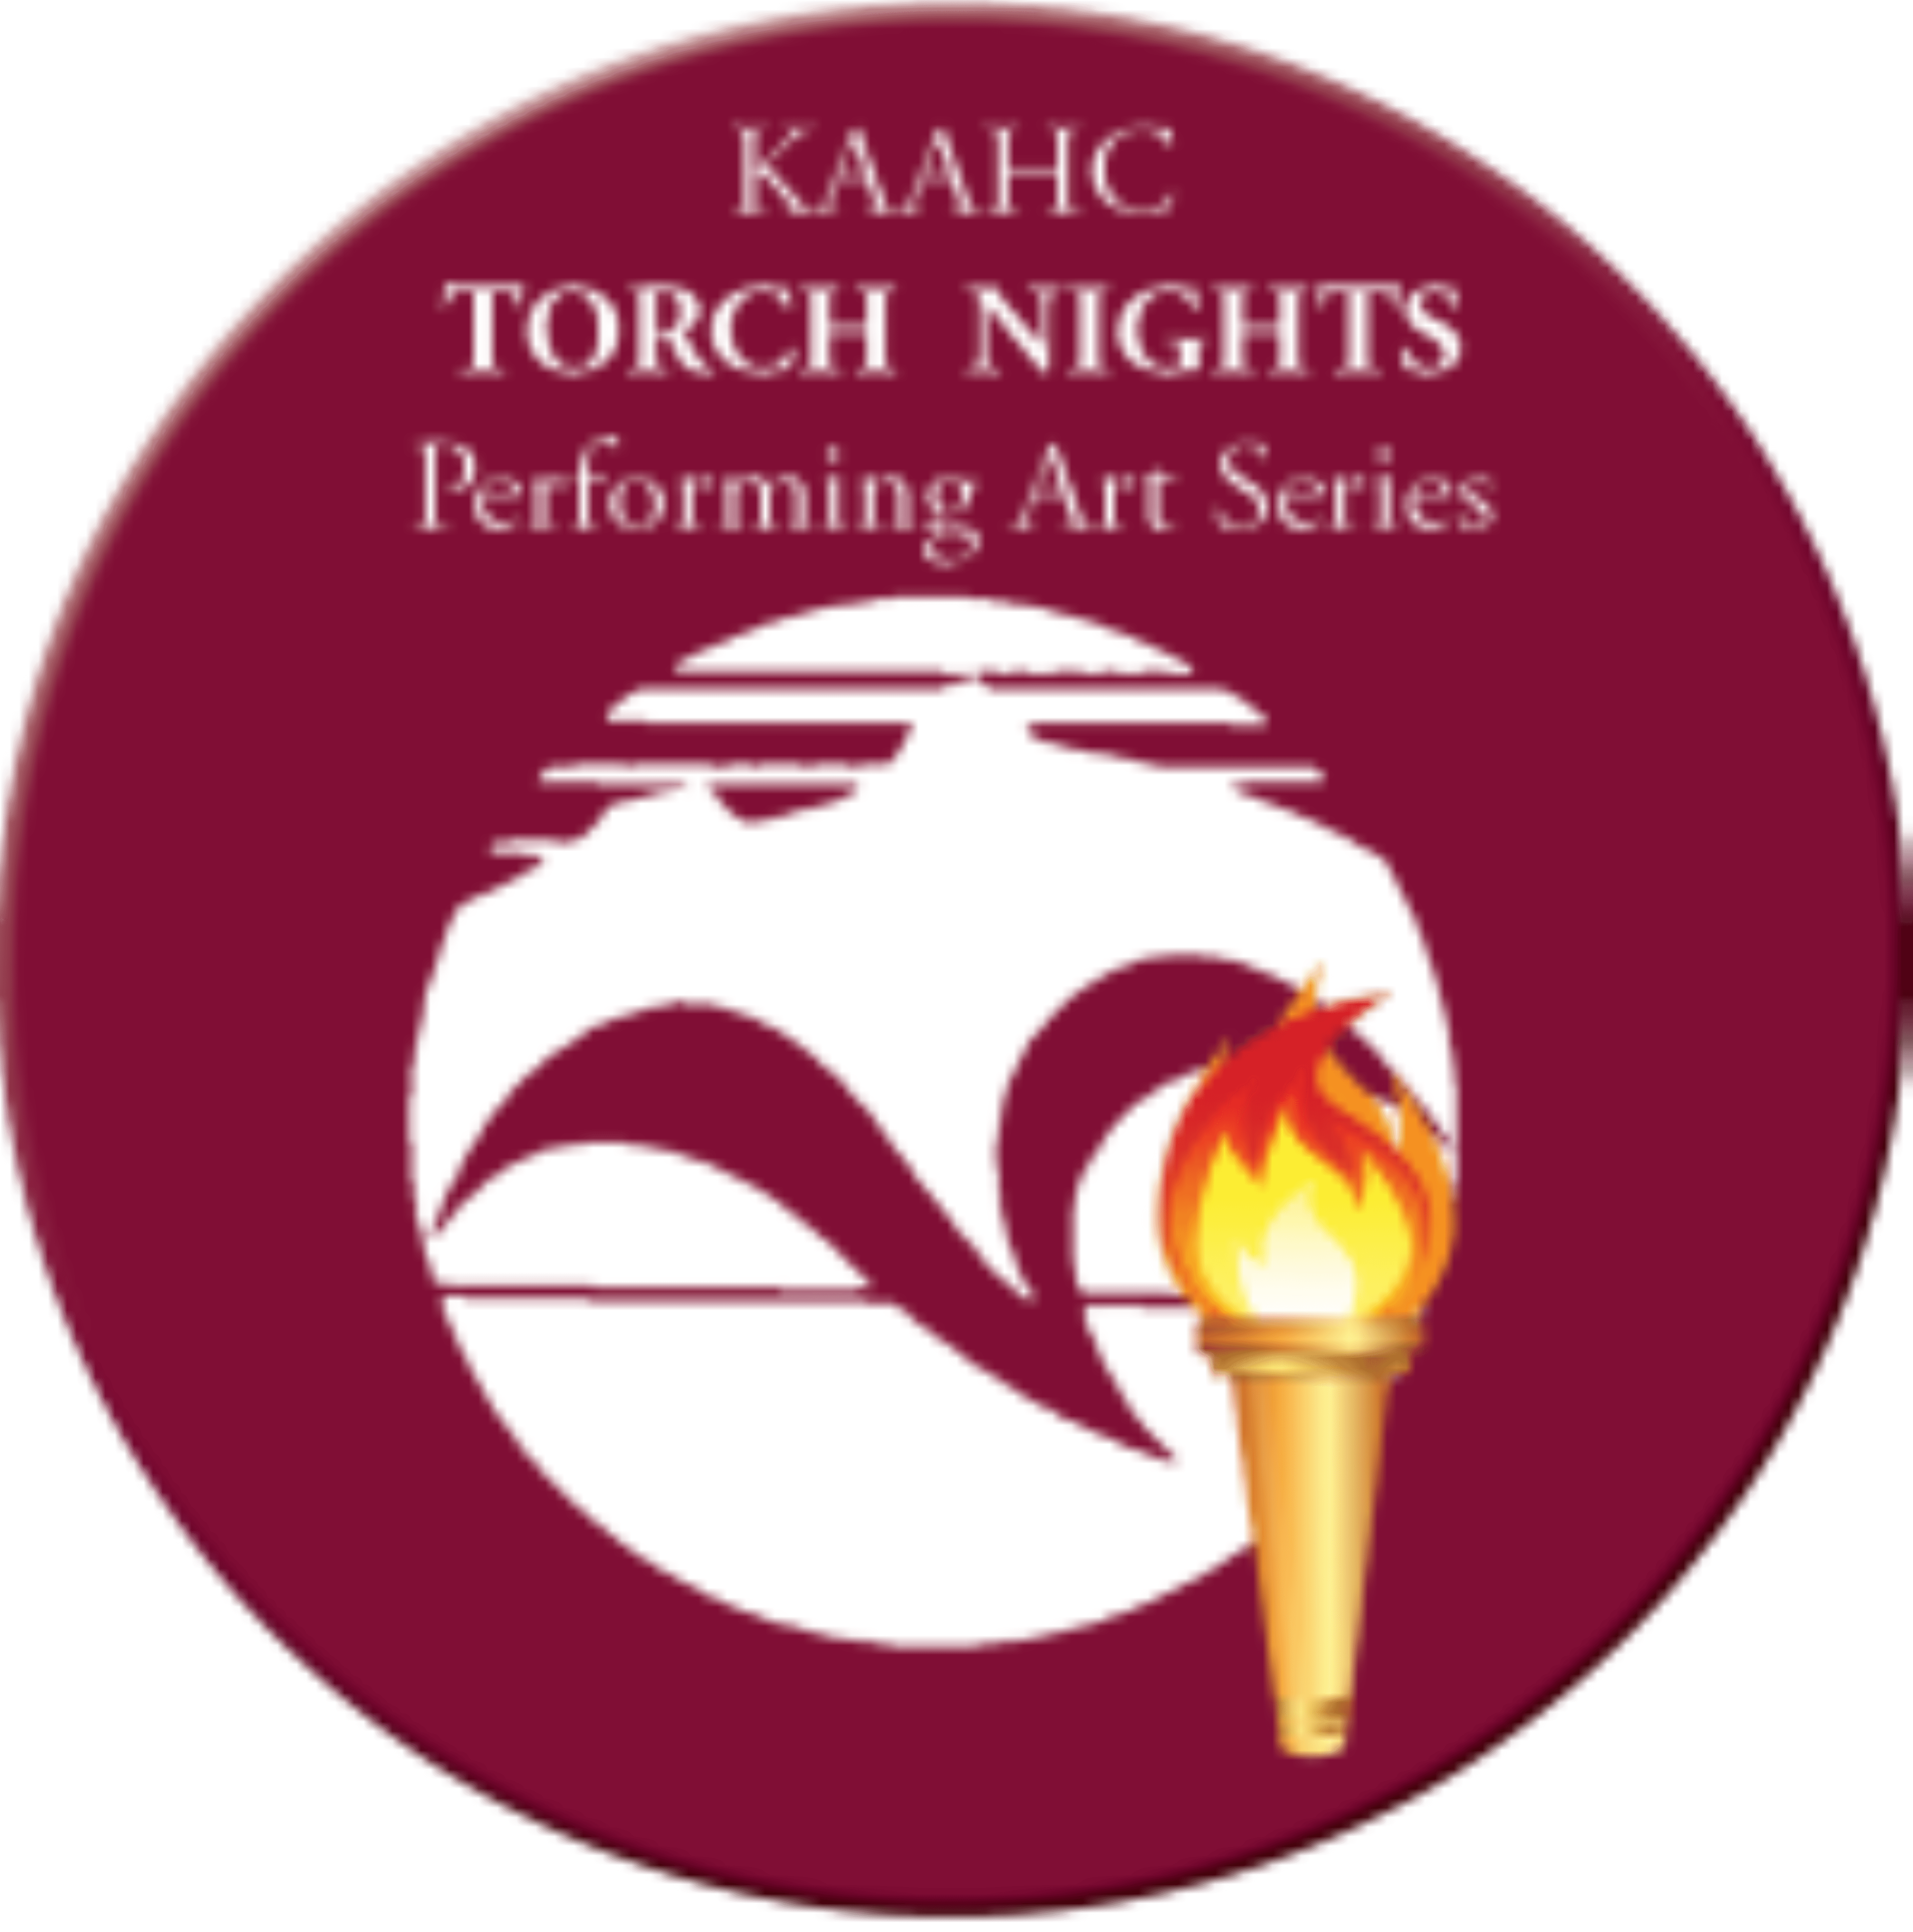 Torch Nights